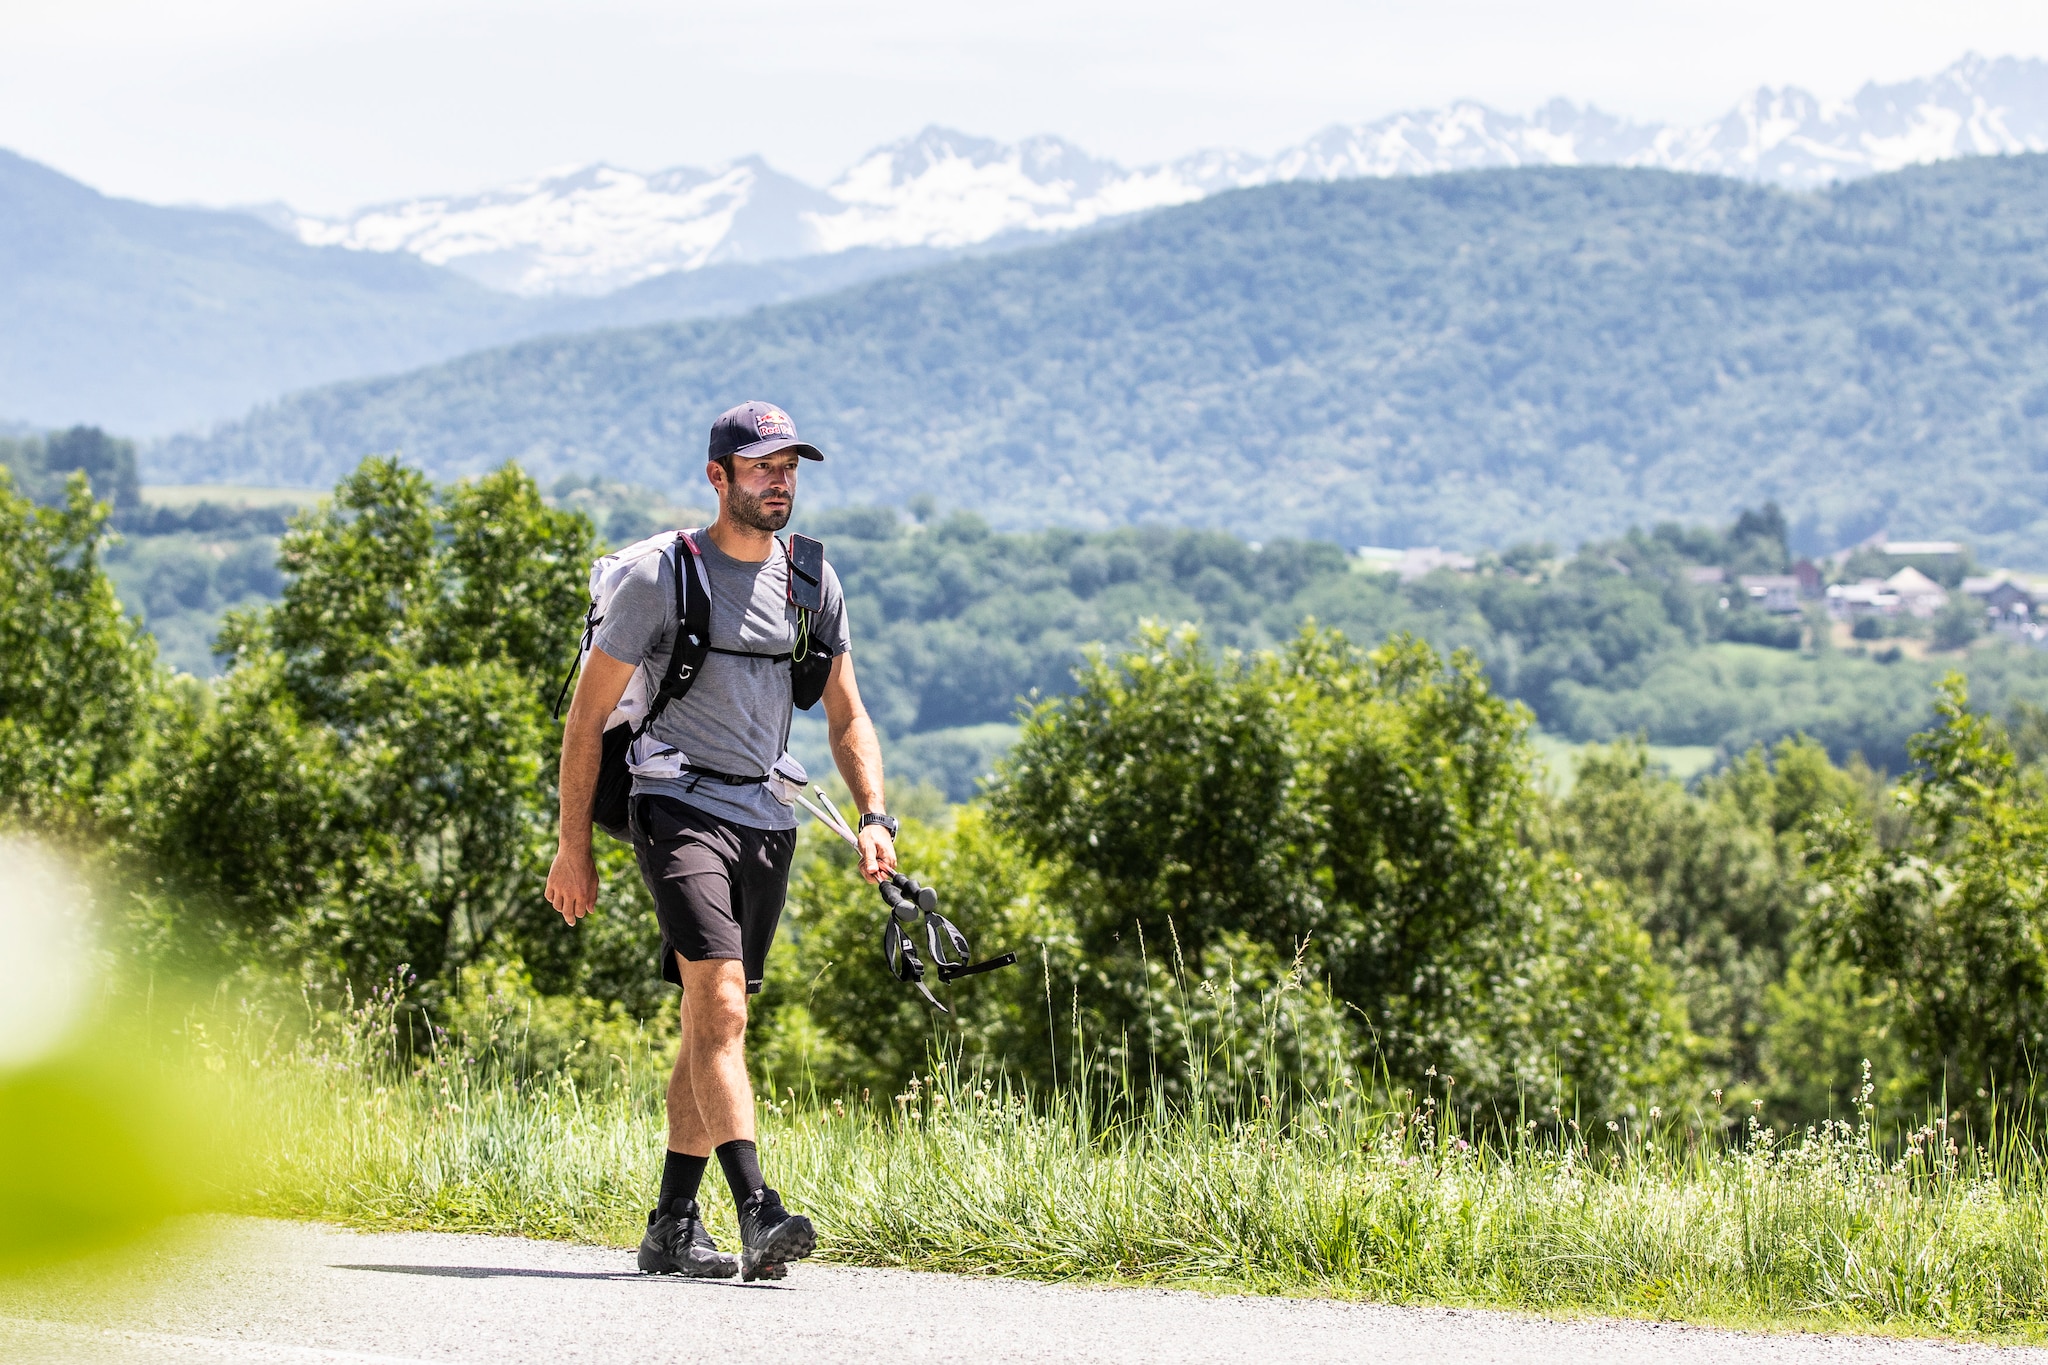 Tom De Dorlodot (BEL) hikes during the Red Bull X-Alps in St. Hilaire , France on June 24, 2019. © Honza Zak / zooom